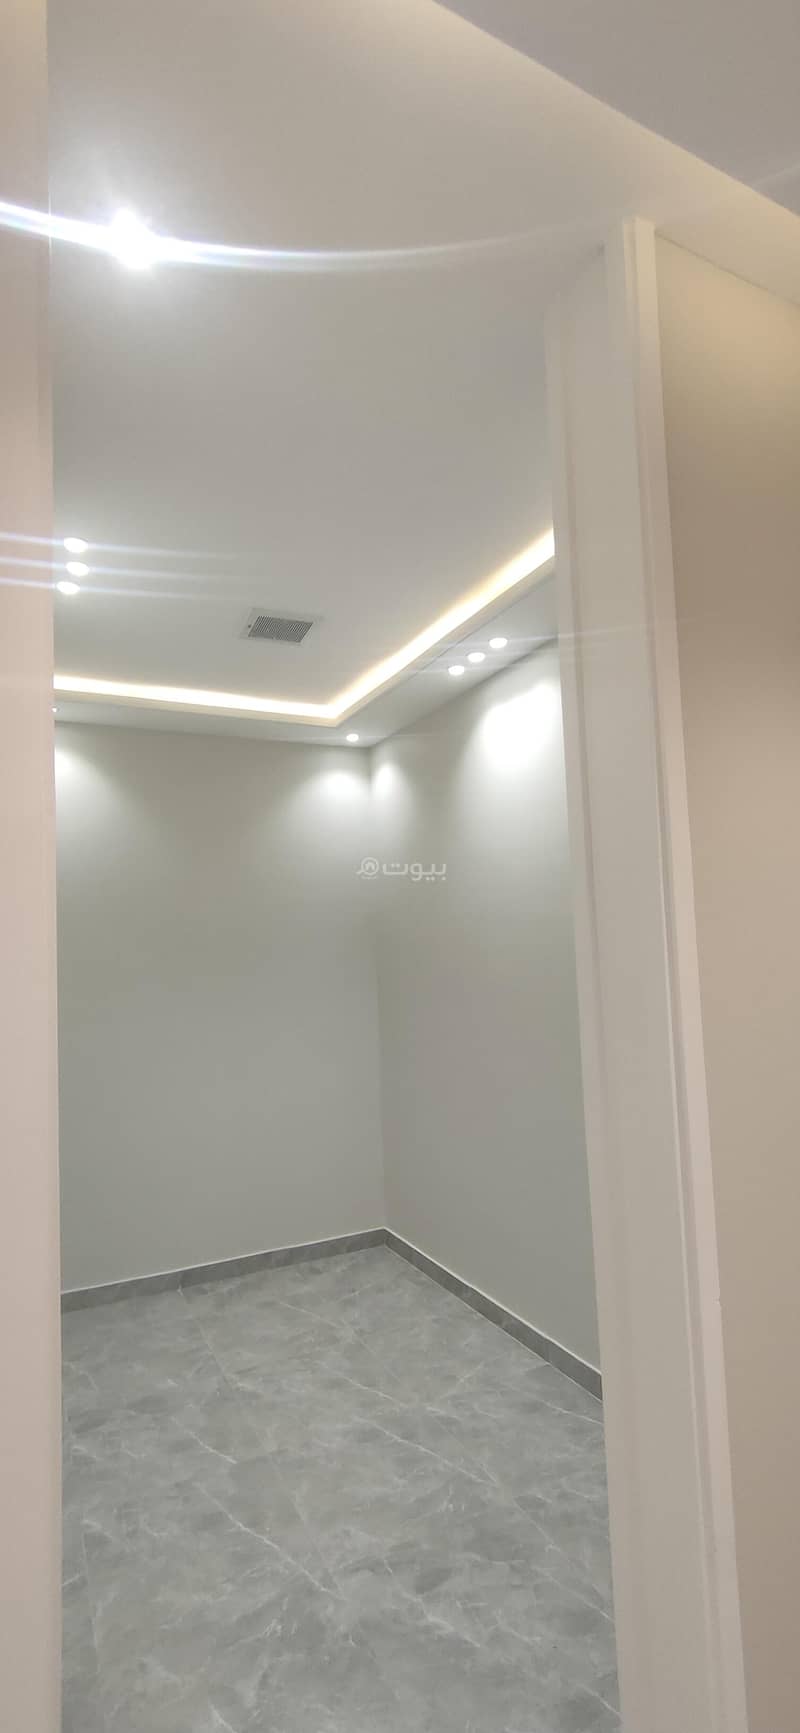 For Sale Internal Staircase Villa And Apartment In Al Munsiyah, East Riyadh